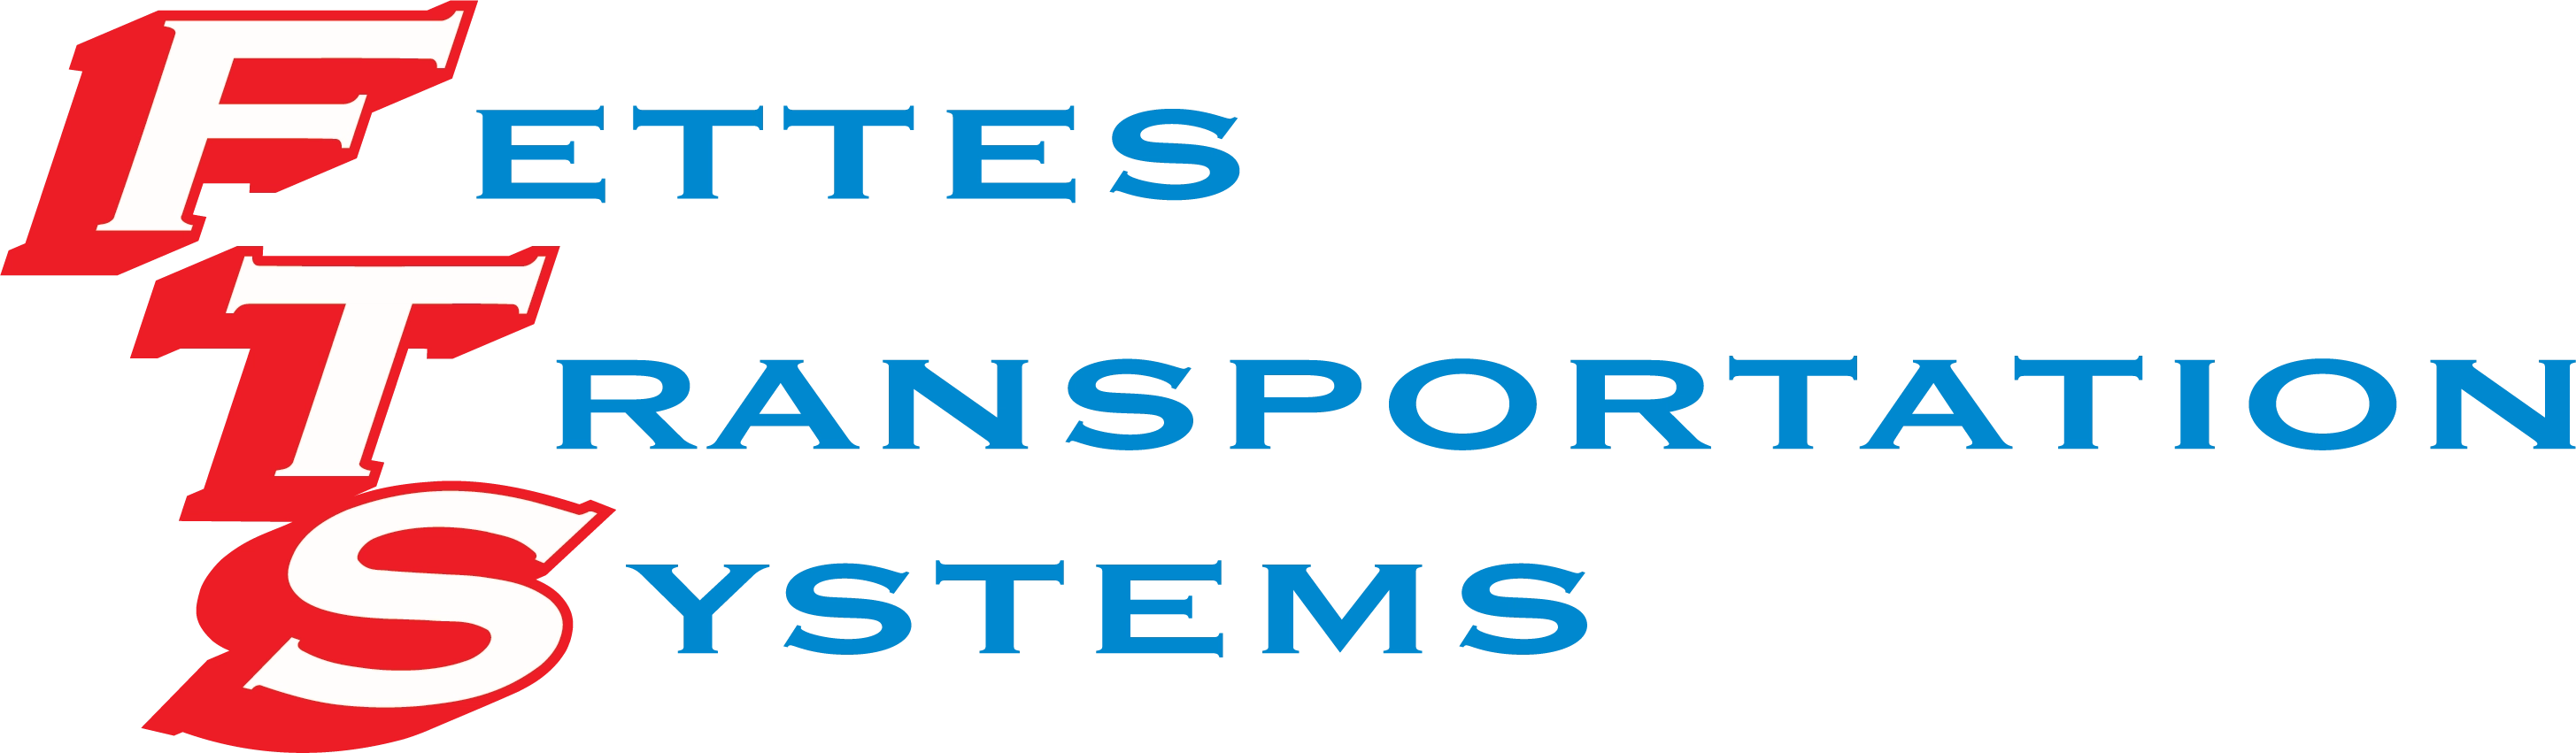 Fettes Transportation Systems Logo